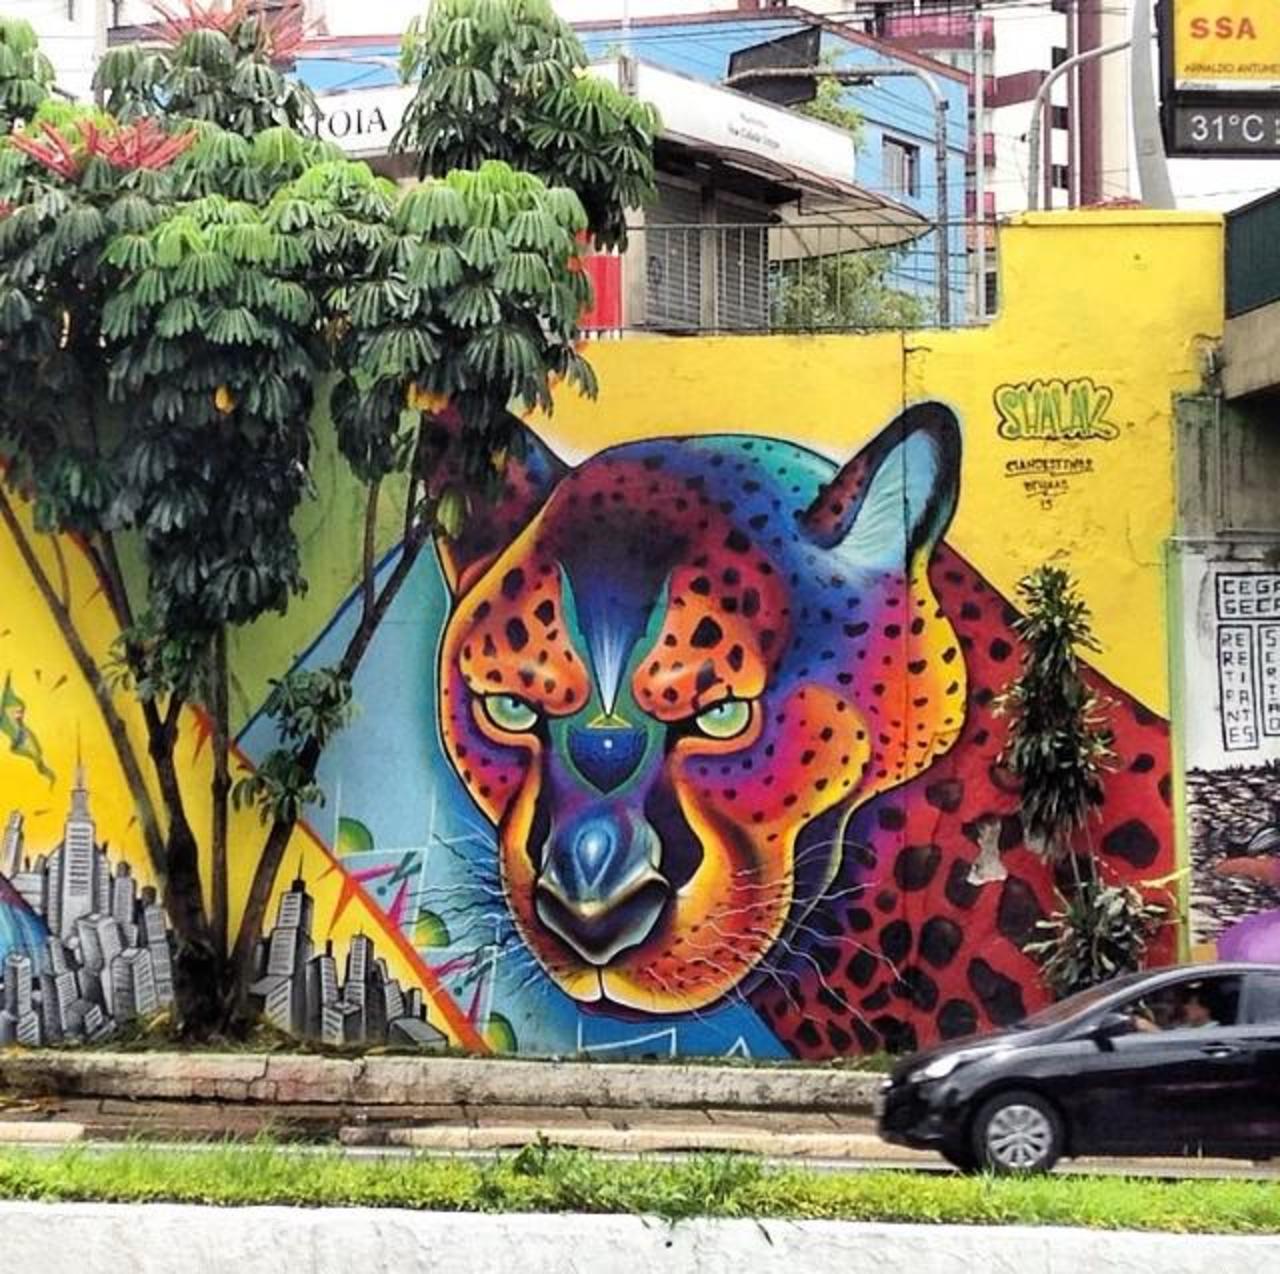 Artist ShalakAttack beautiful & colourful nature in Street Art piece in São Paulo 

#art #graffiti #mural #streetart http://t.co/yMIwQnUt6F